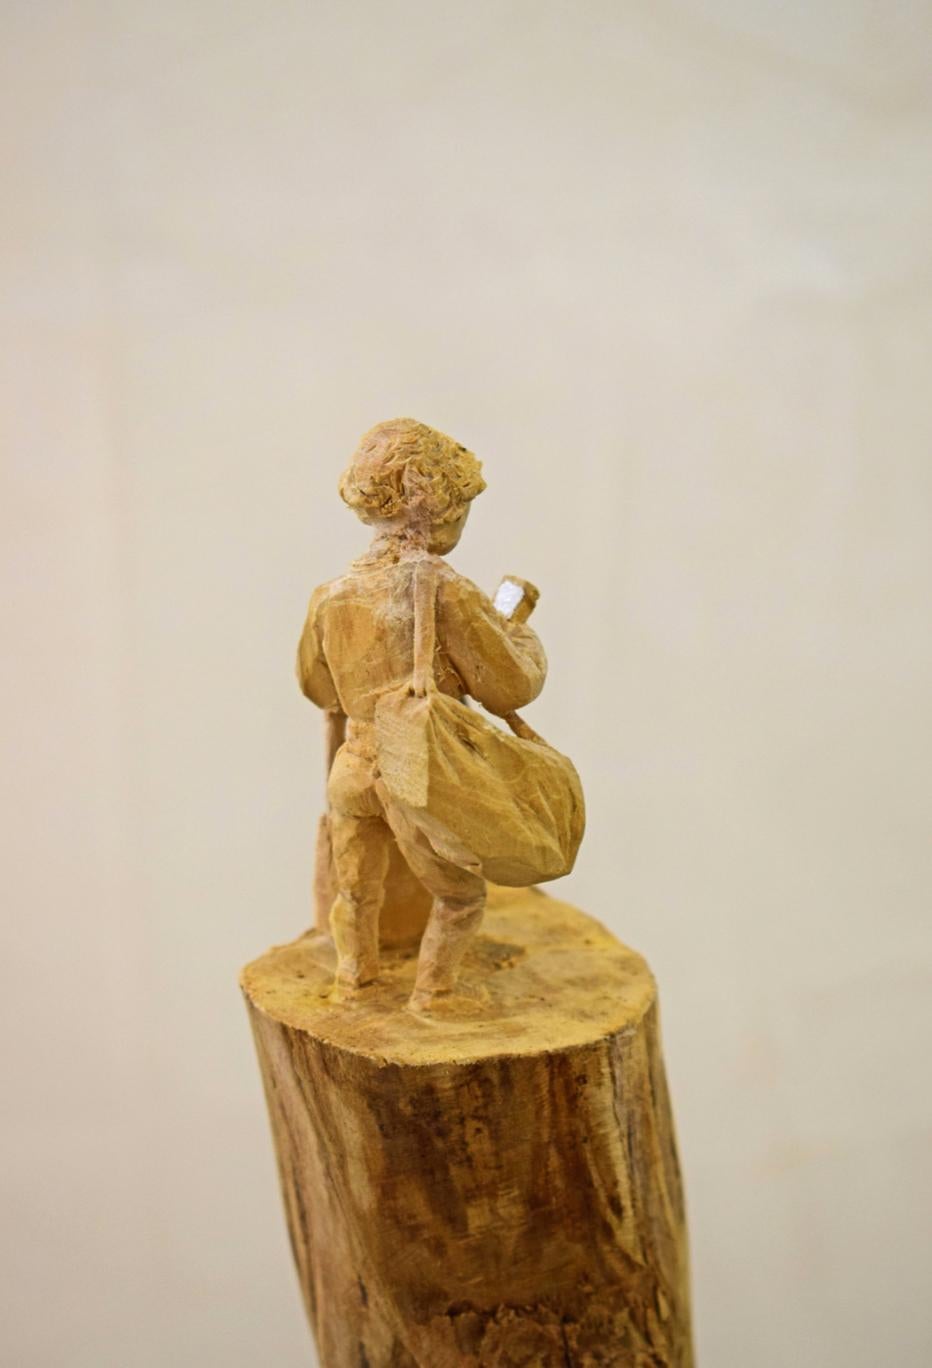 Communication - Wood sculpture, figurative sculpture, wood carving 2